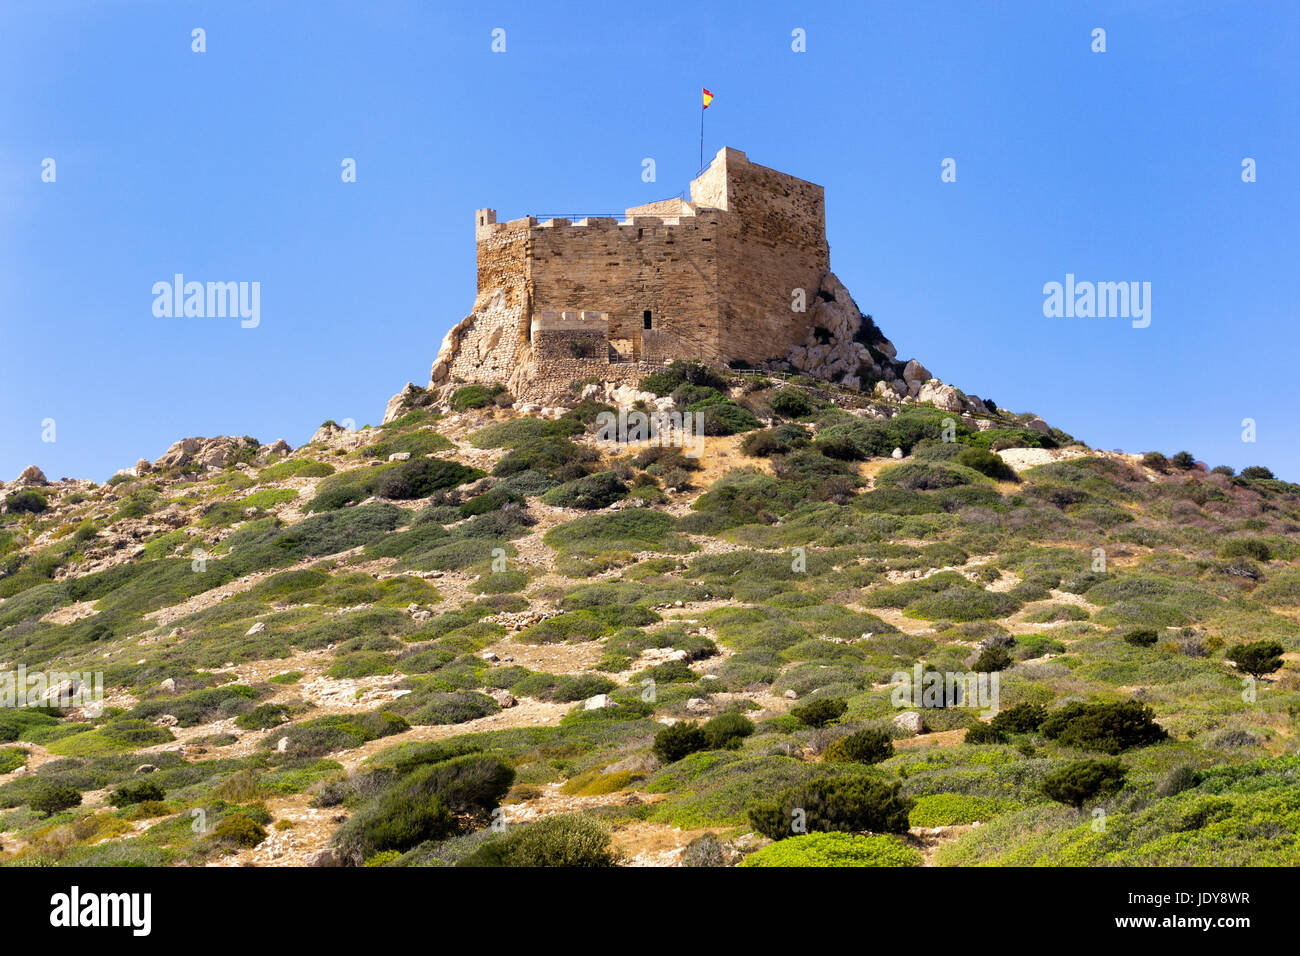 Old castle in the Carera island, Balearic Islands, Spain Stock Photo